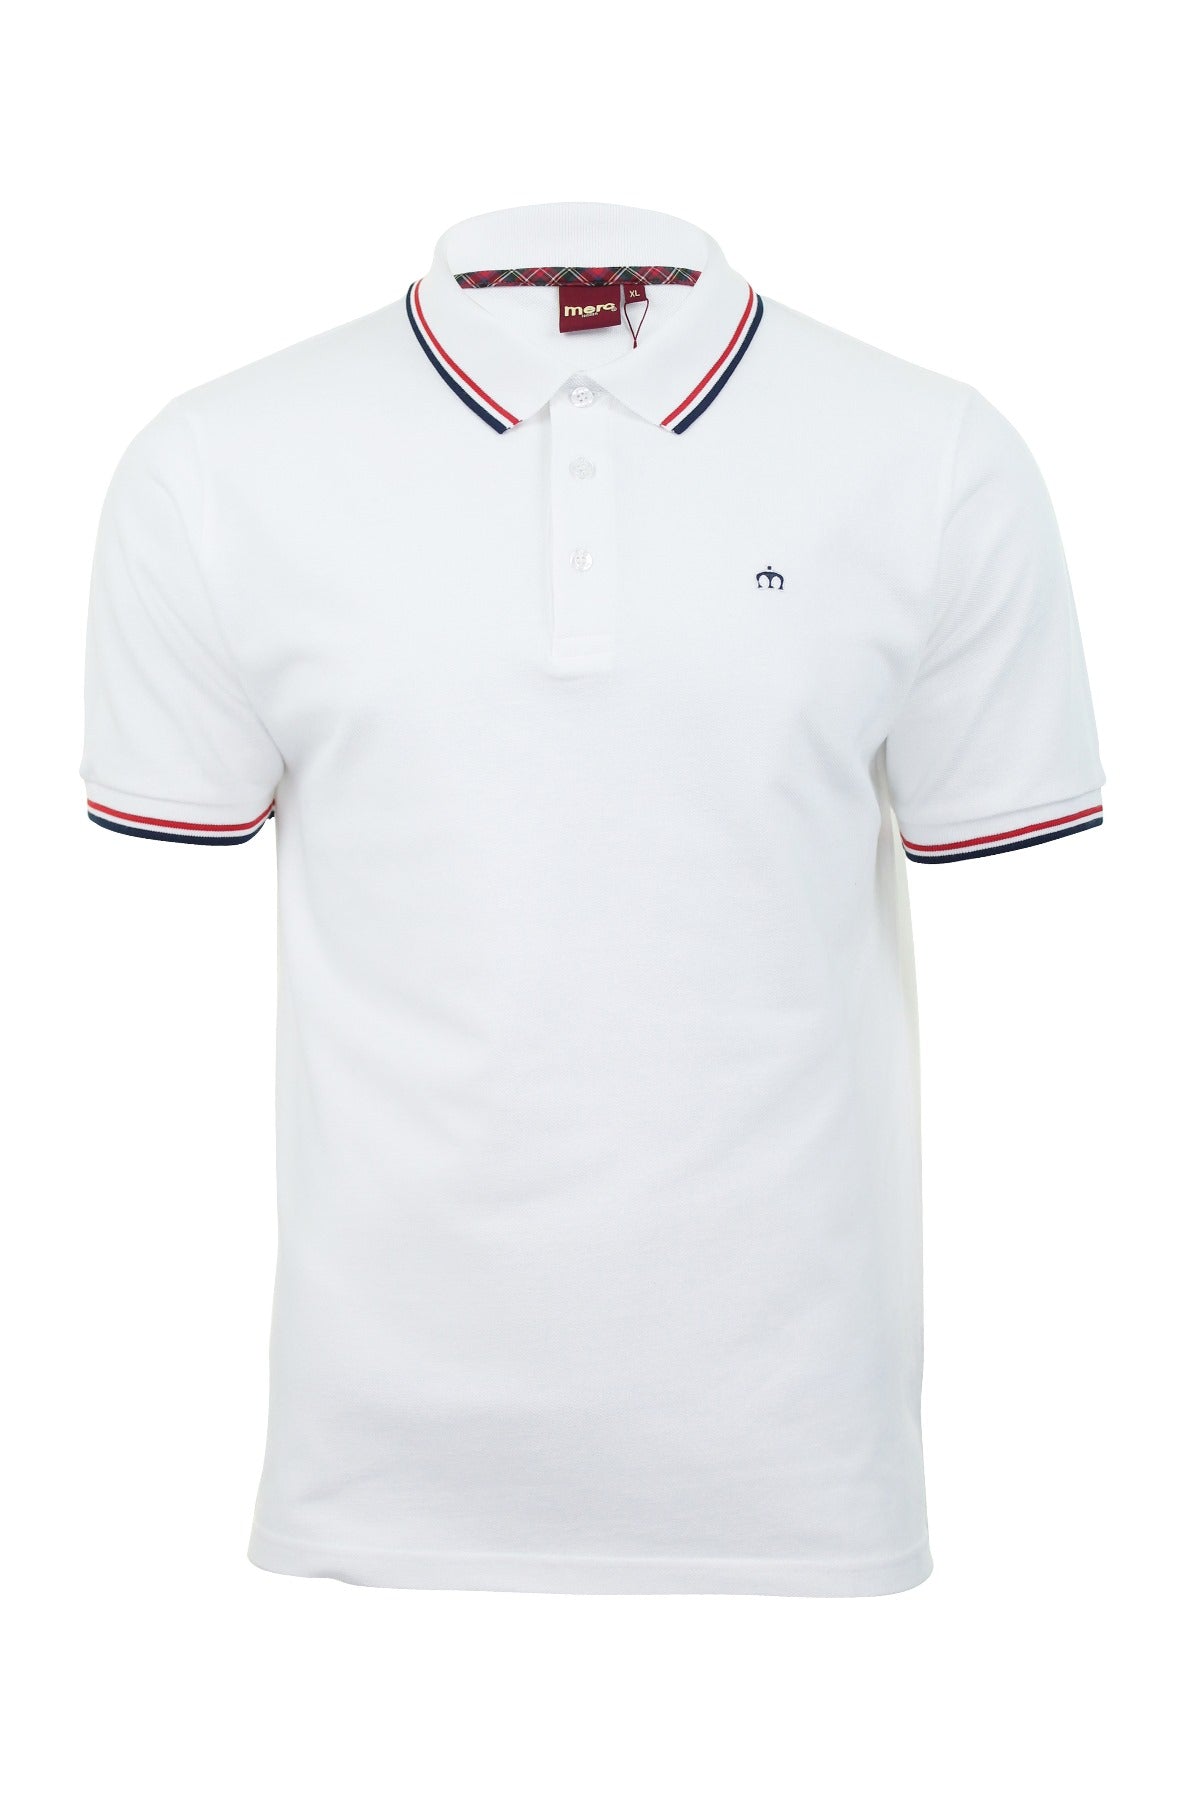 Mens Merc London 'Card' Pique Polo Shirt Mod Retro, 01, CARD_, White - Red